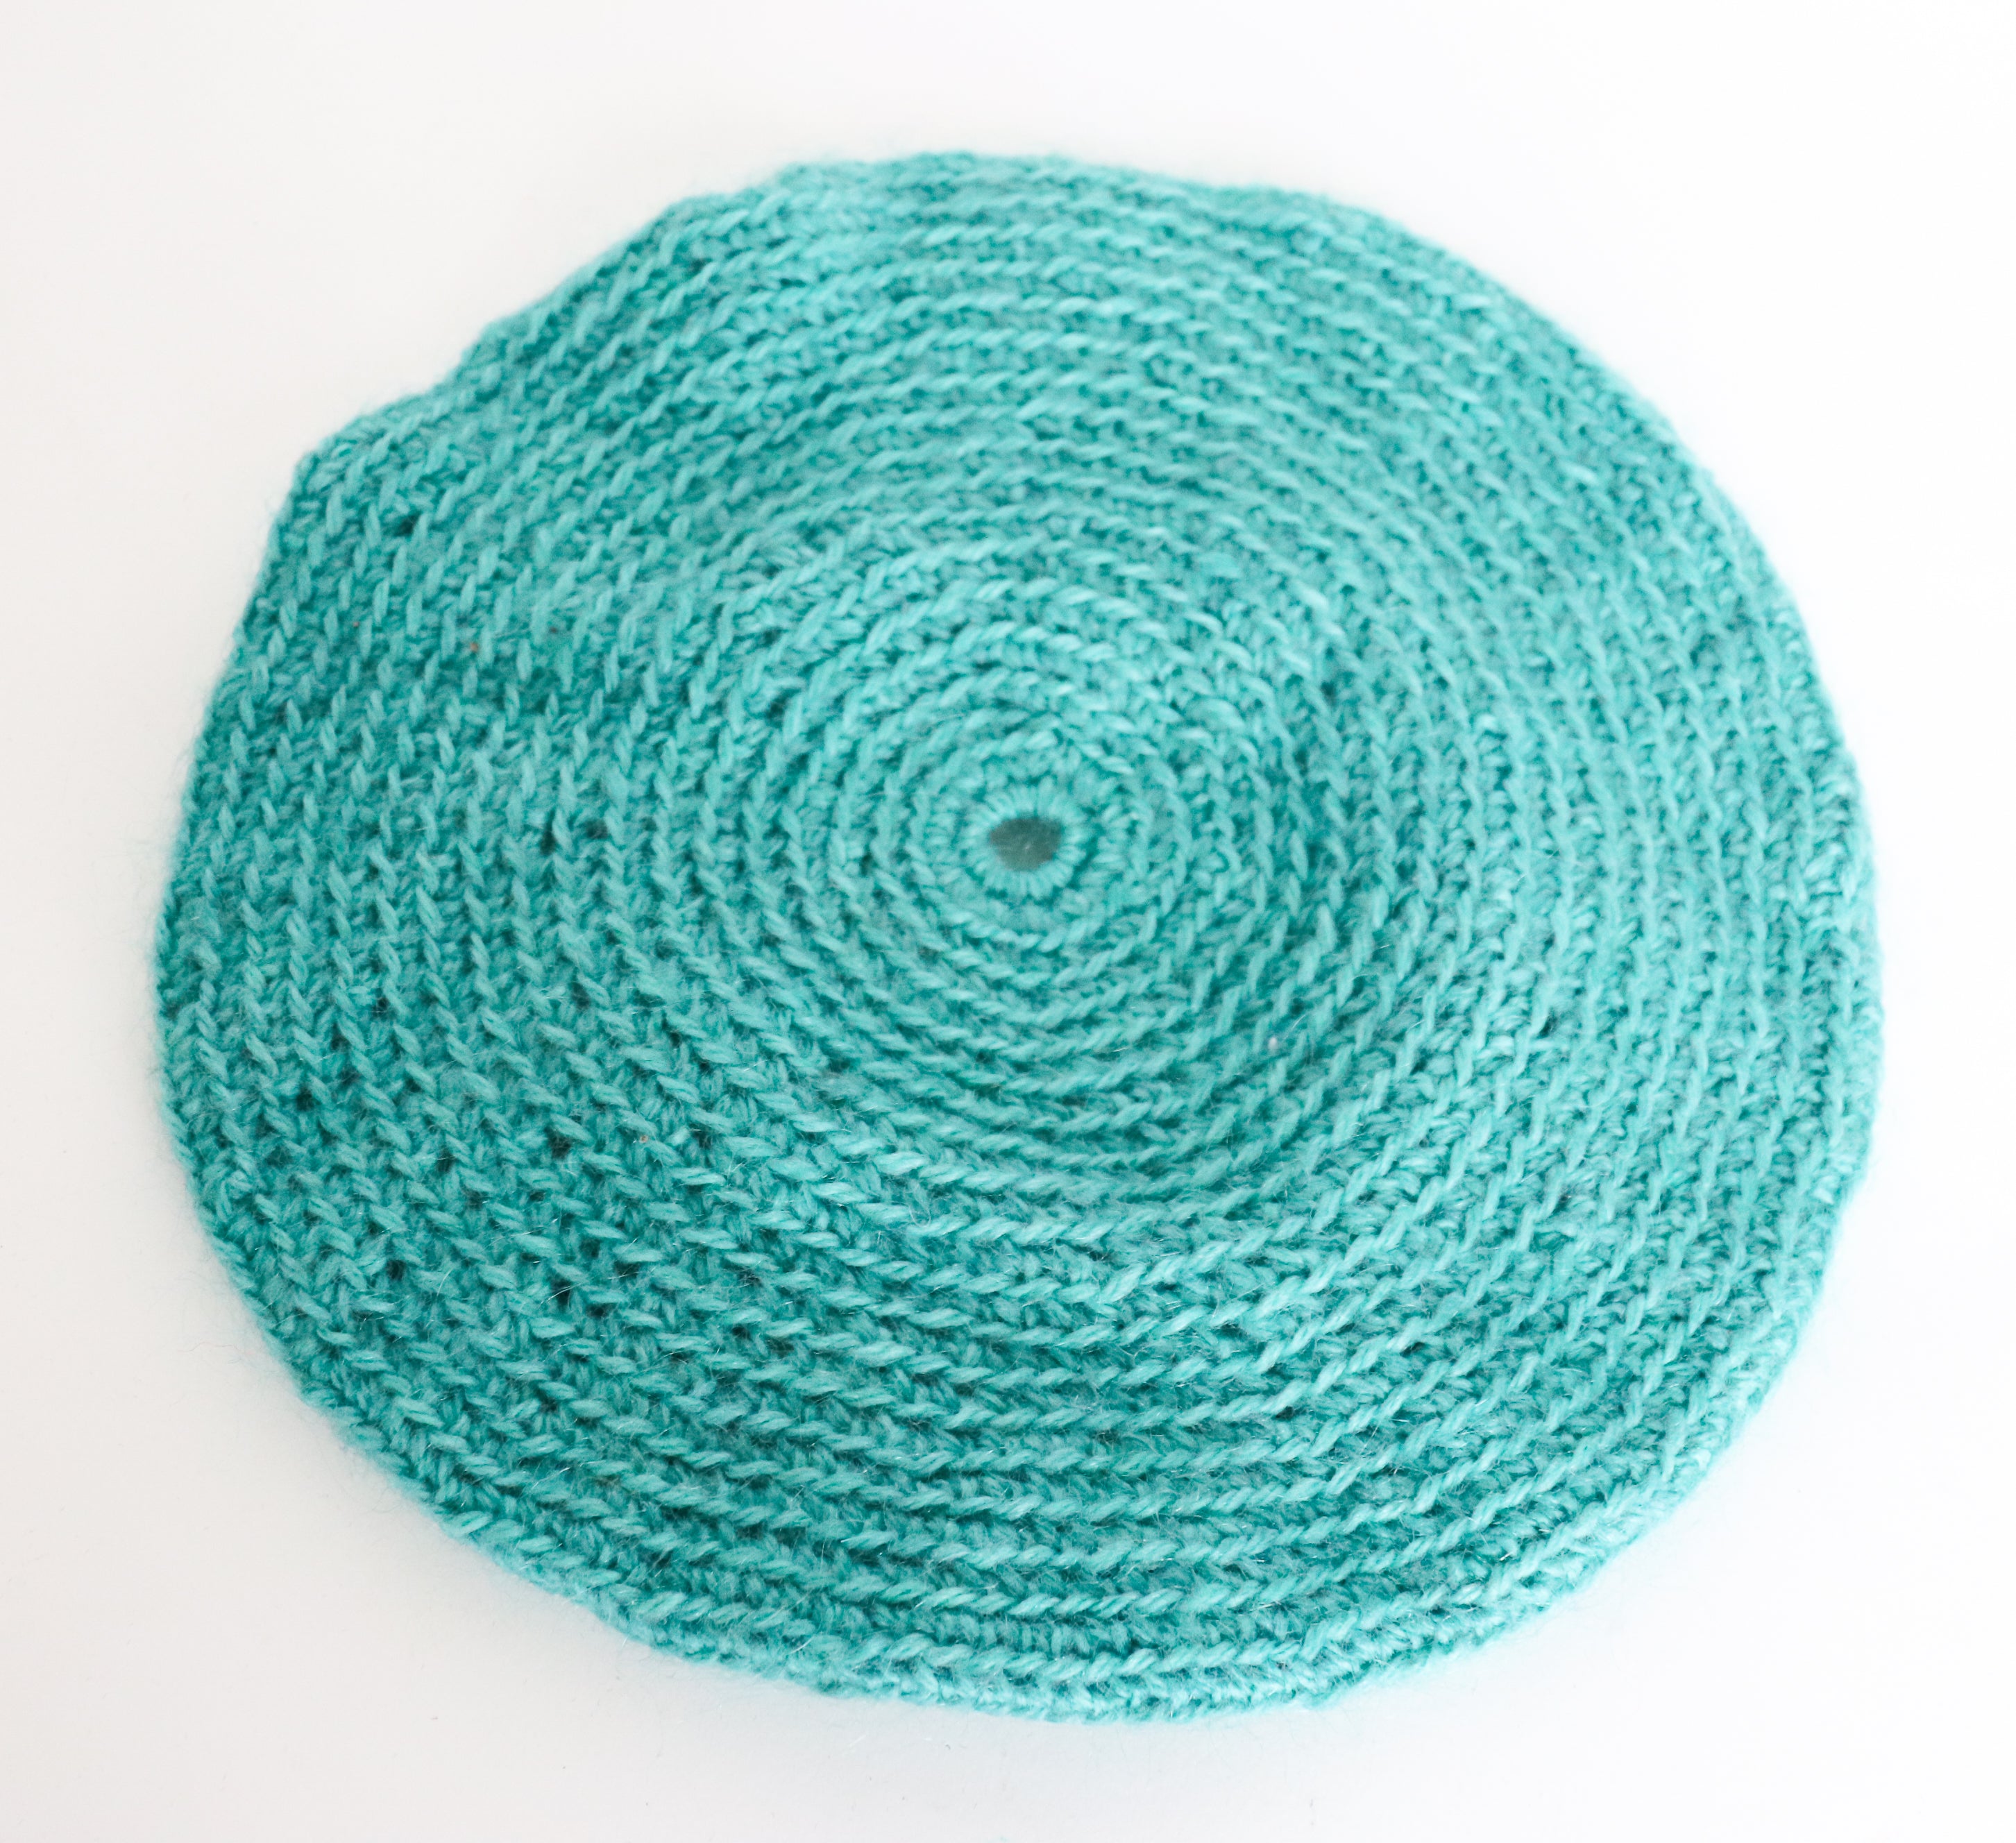 Vintage Wool Hand Knitted Beret - Aqua Green - Medium